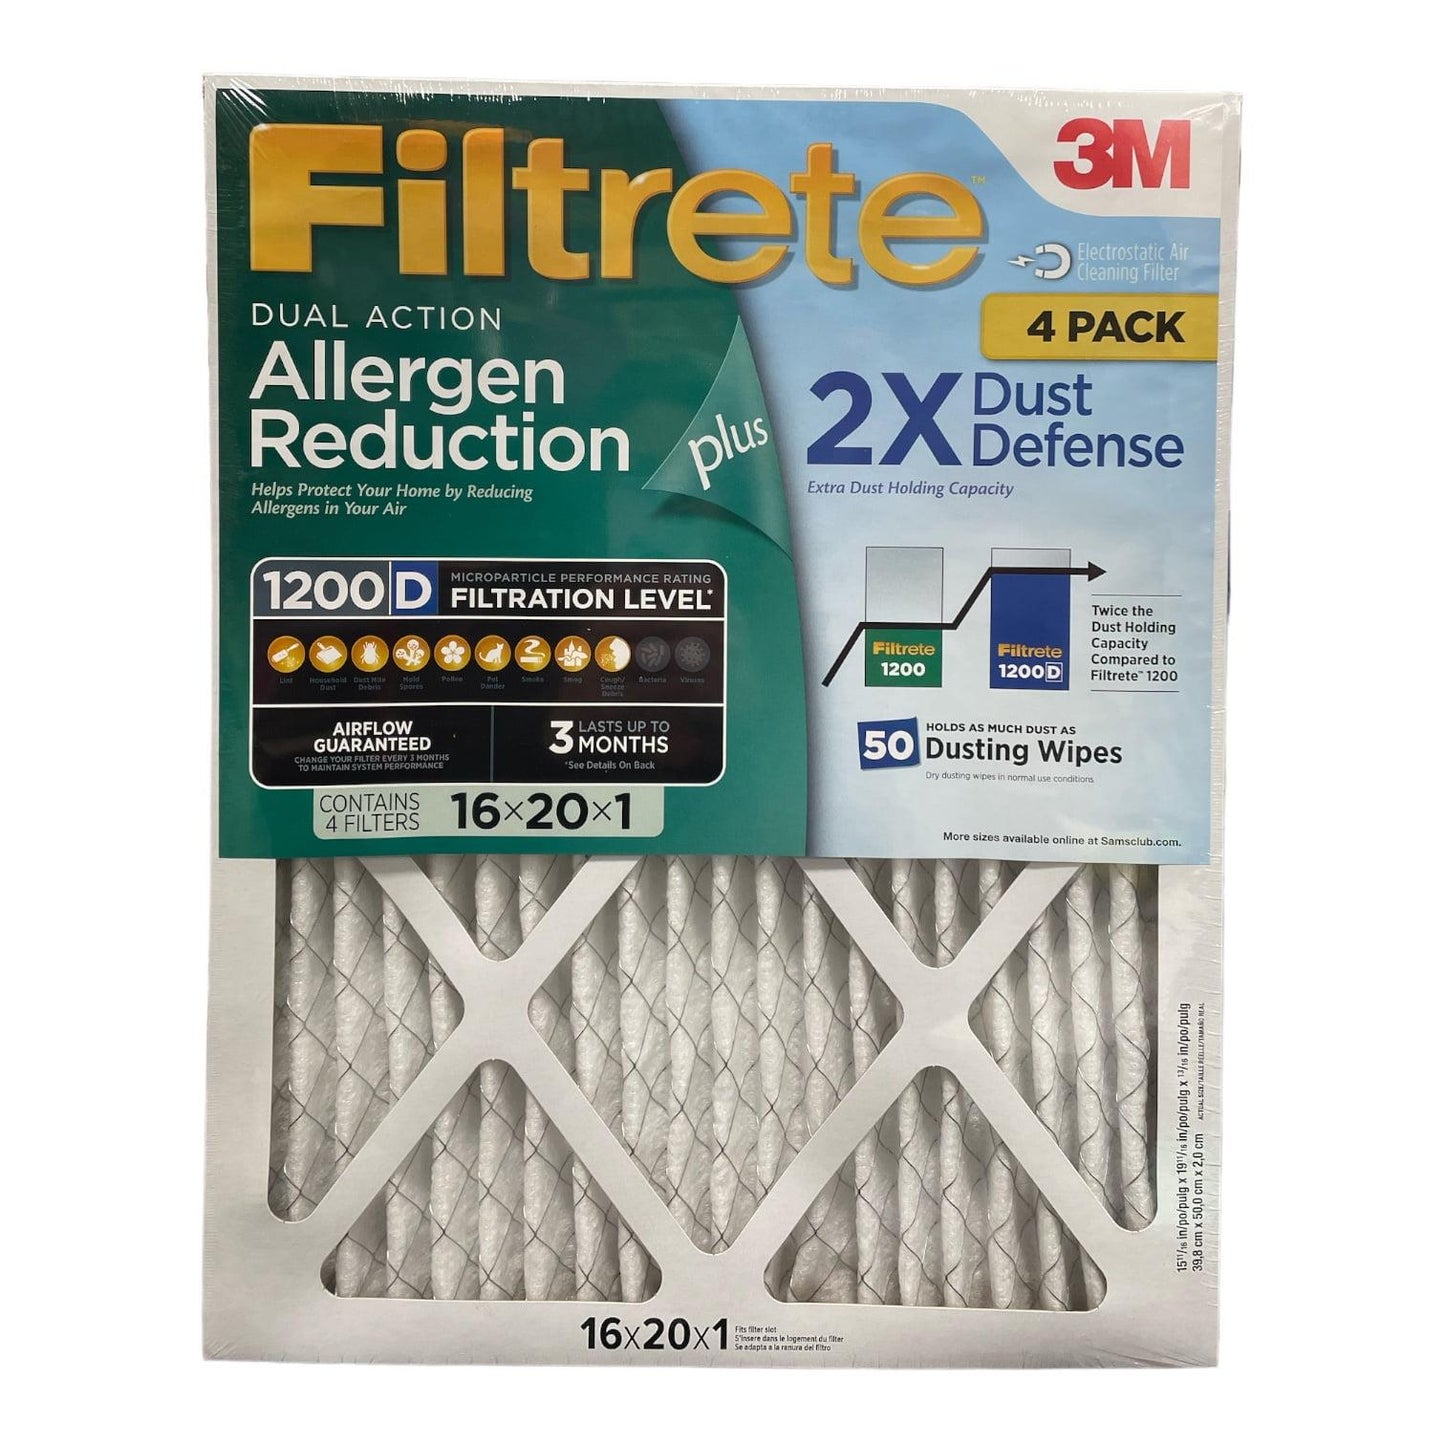 Filtrete 16x20x1 Air Filter MPR 1200D MERV 11, Allergen Reduction Plus Dust, 4-Pack Filters